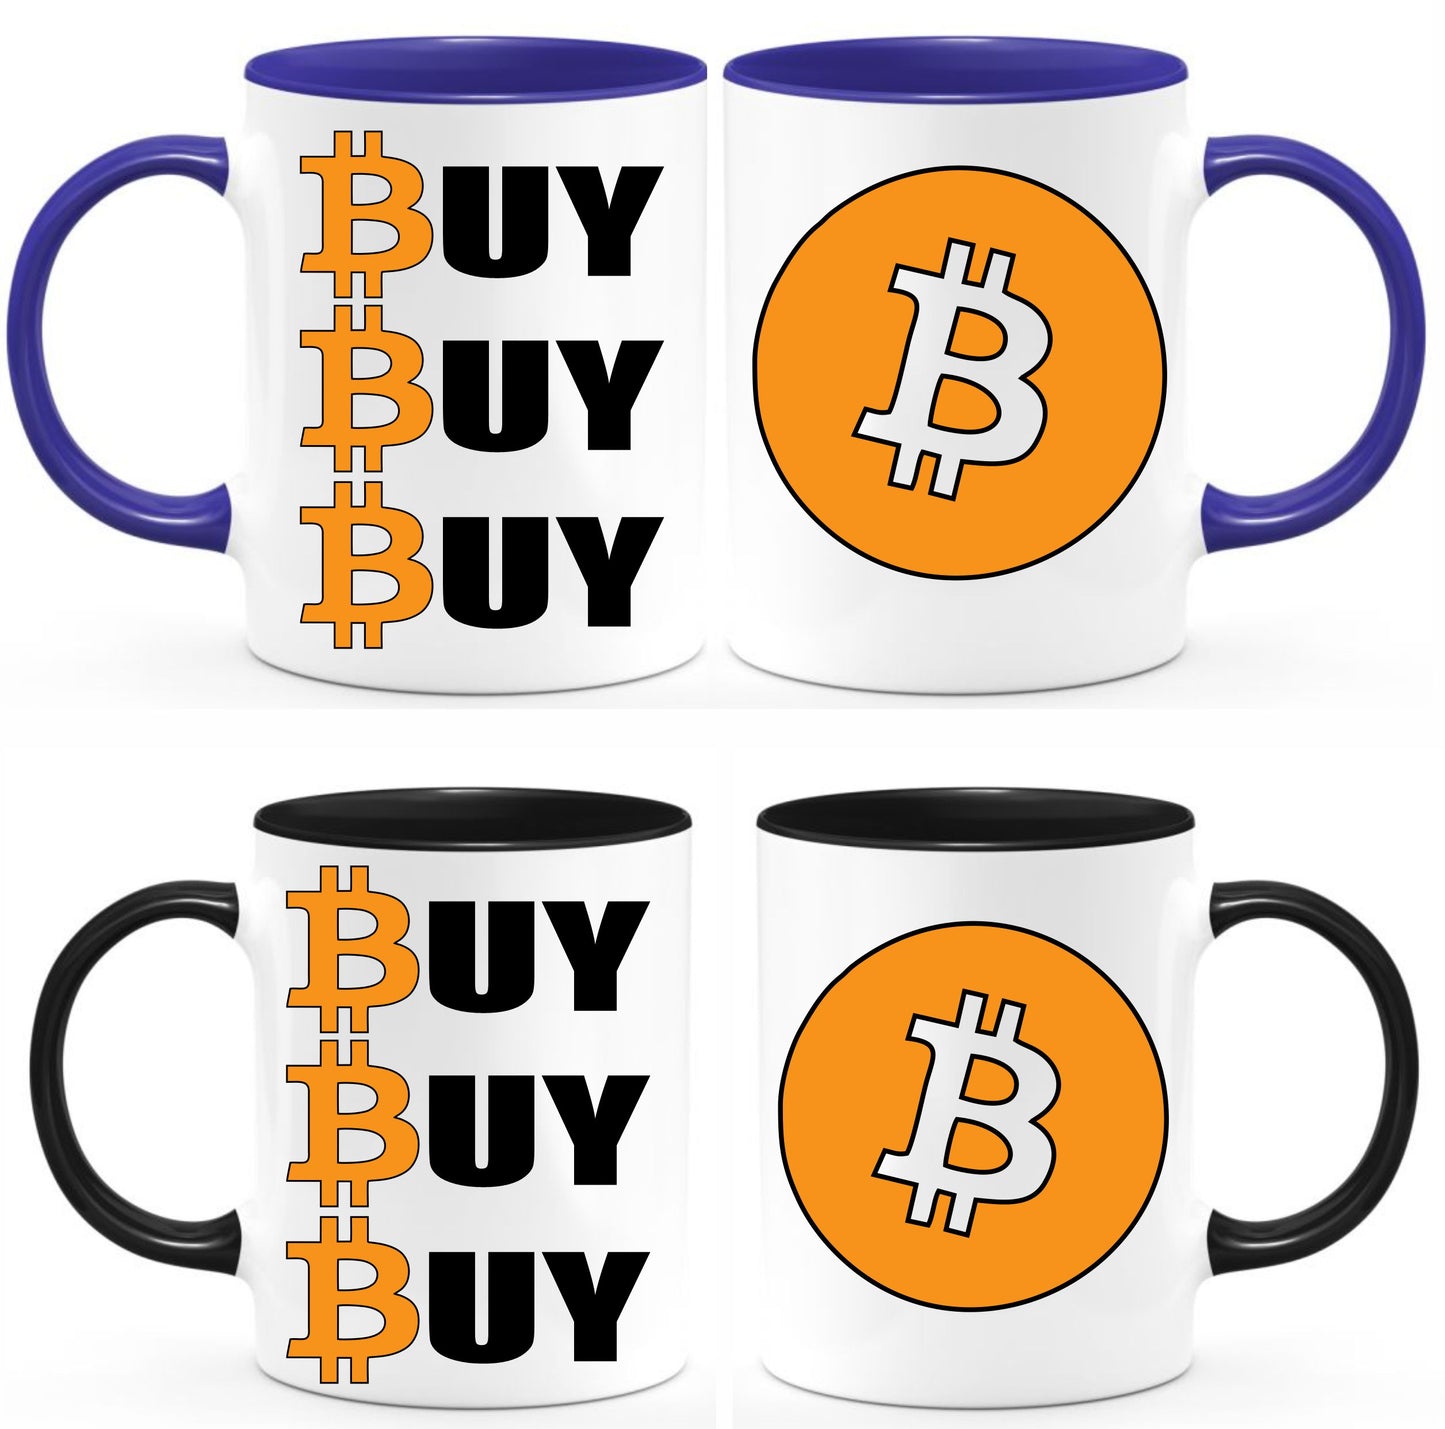 Buy Buy Buy Bitcoin coffee mug